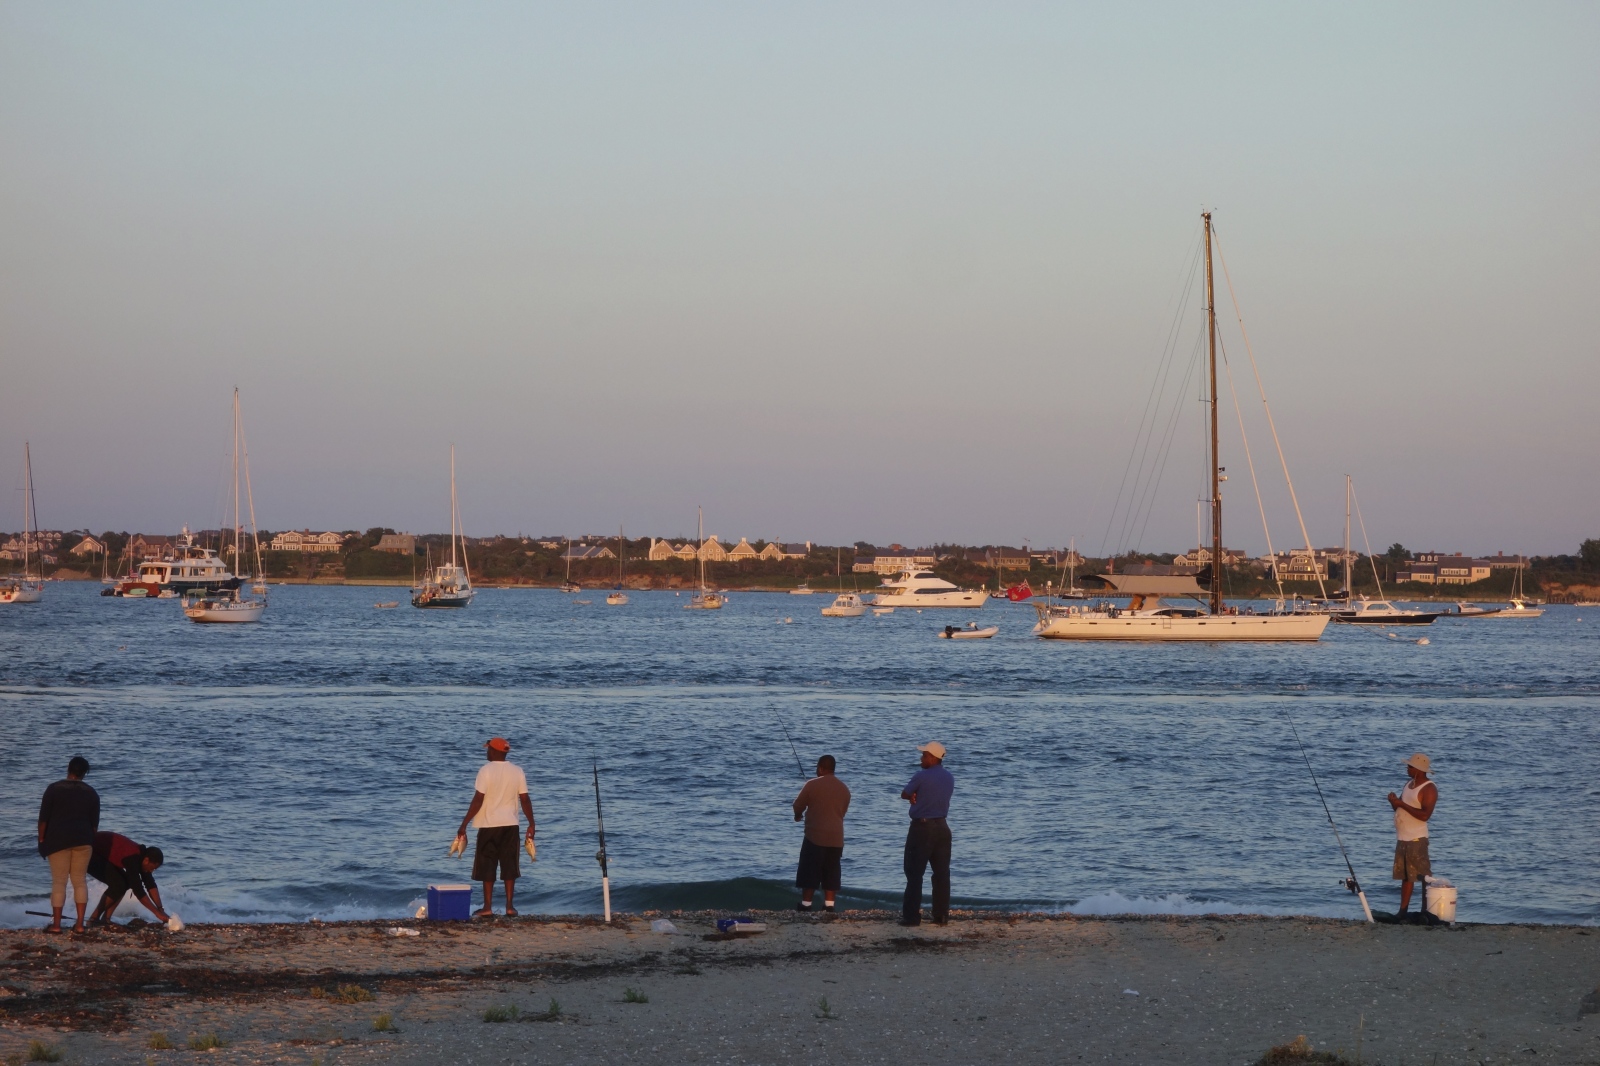 At the Water's Edge - Fishermen at Brant Point, Nantucket, Massachusetts